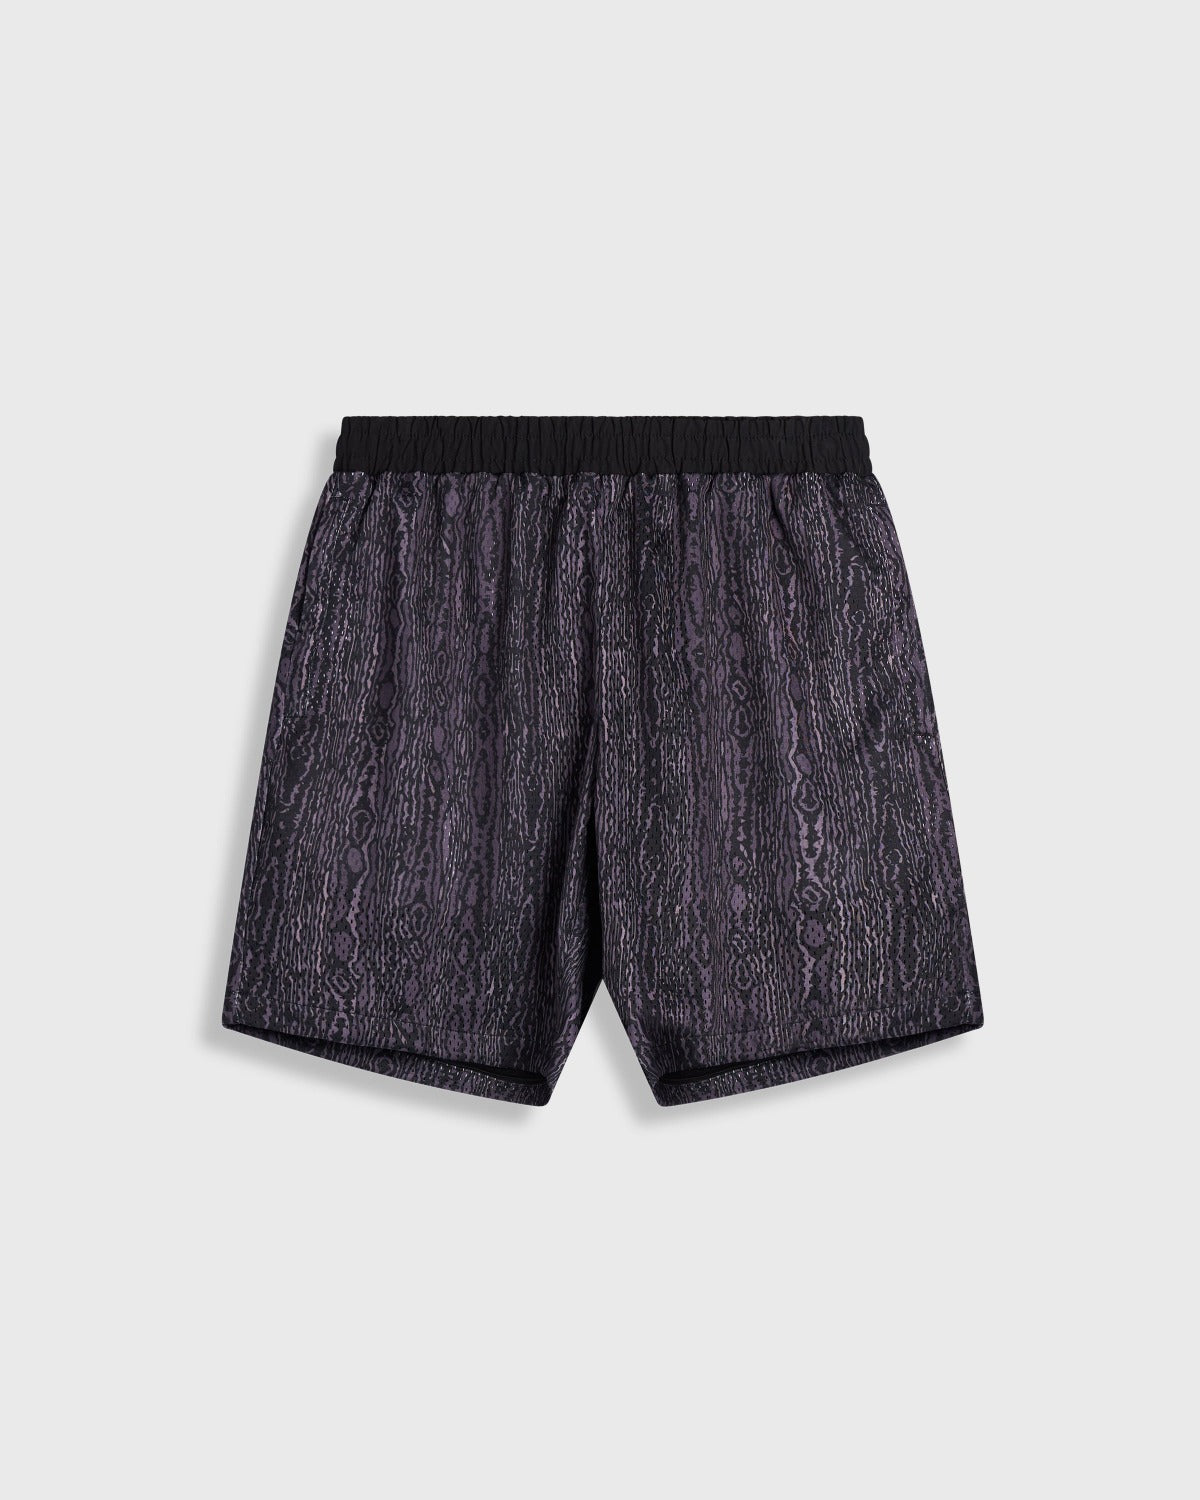 BLACK mesh shorts